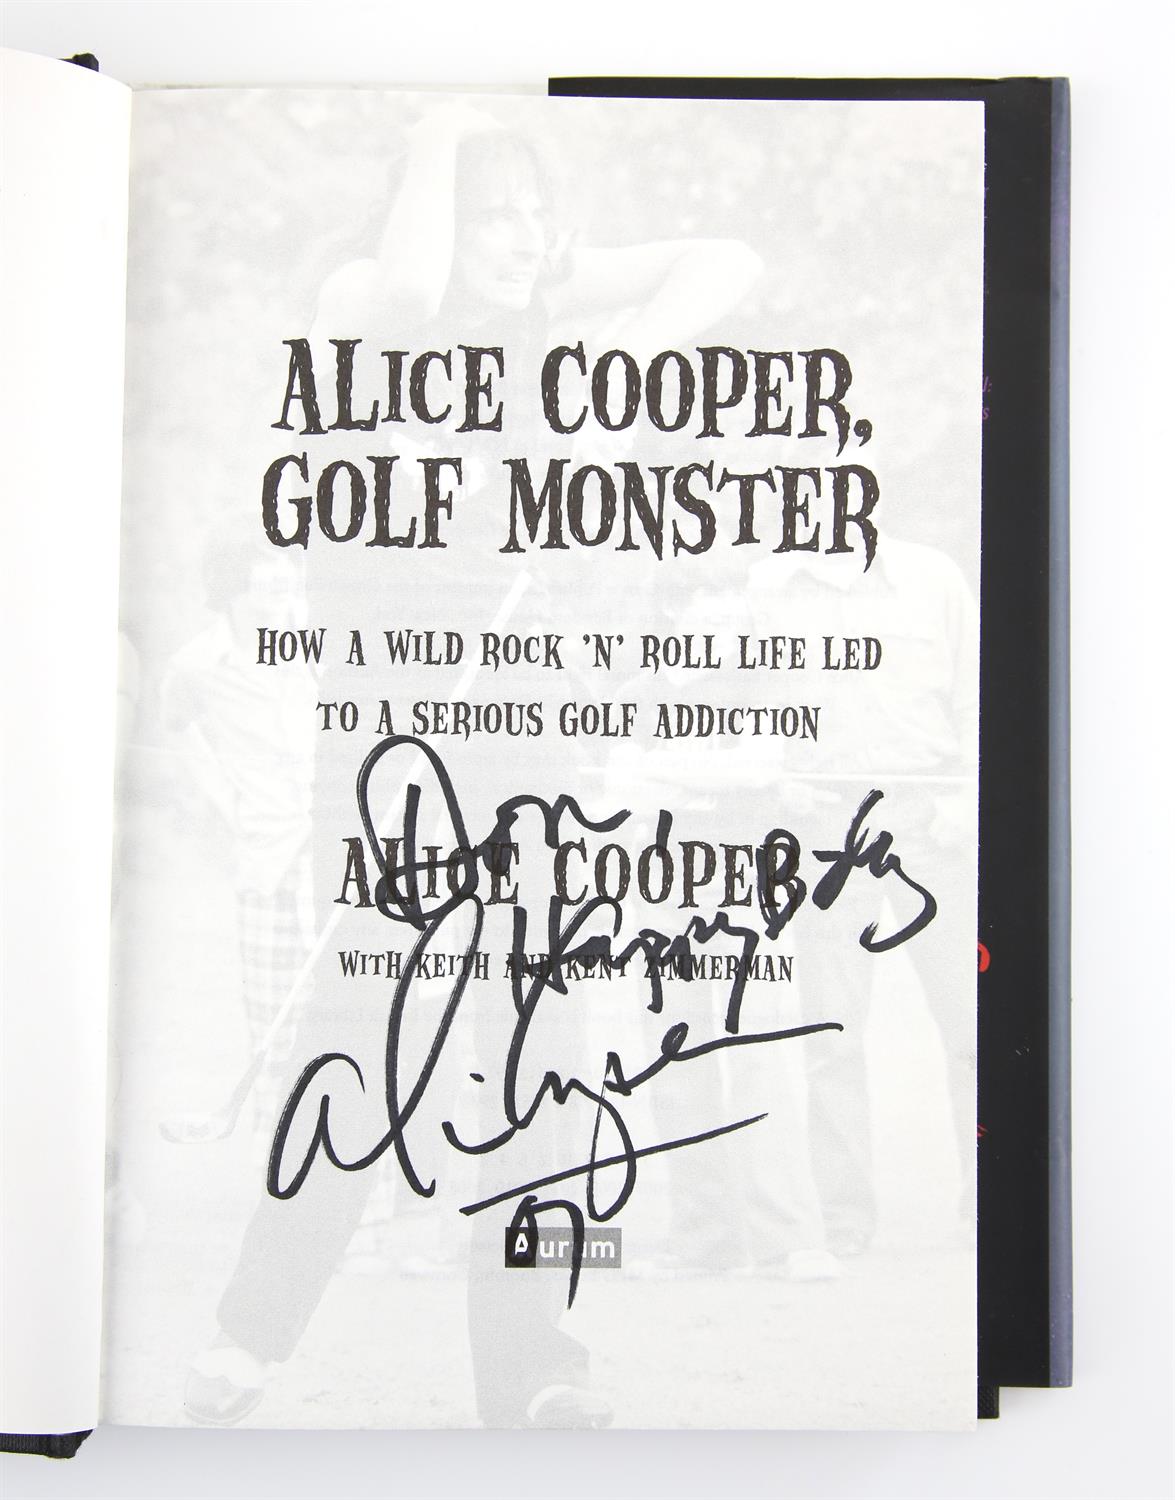 Alice Cooper - Golf Monster signed hardback book from 2007.